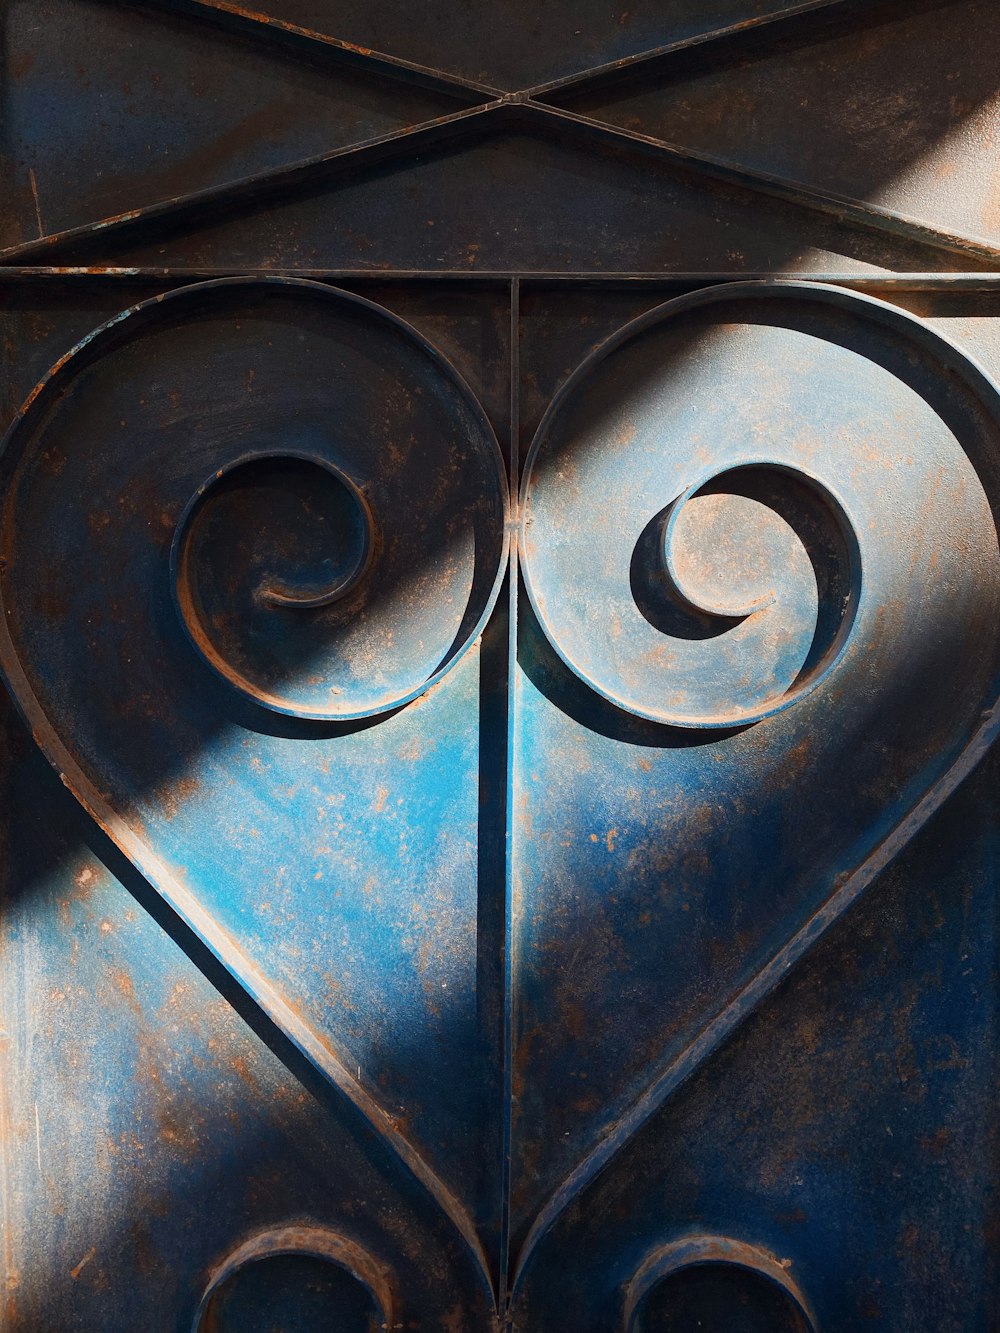 a close up of a metal door with a spiral design